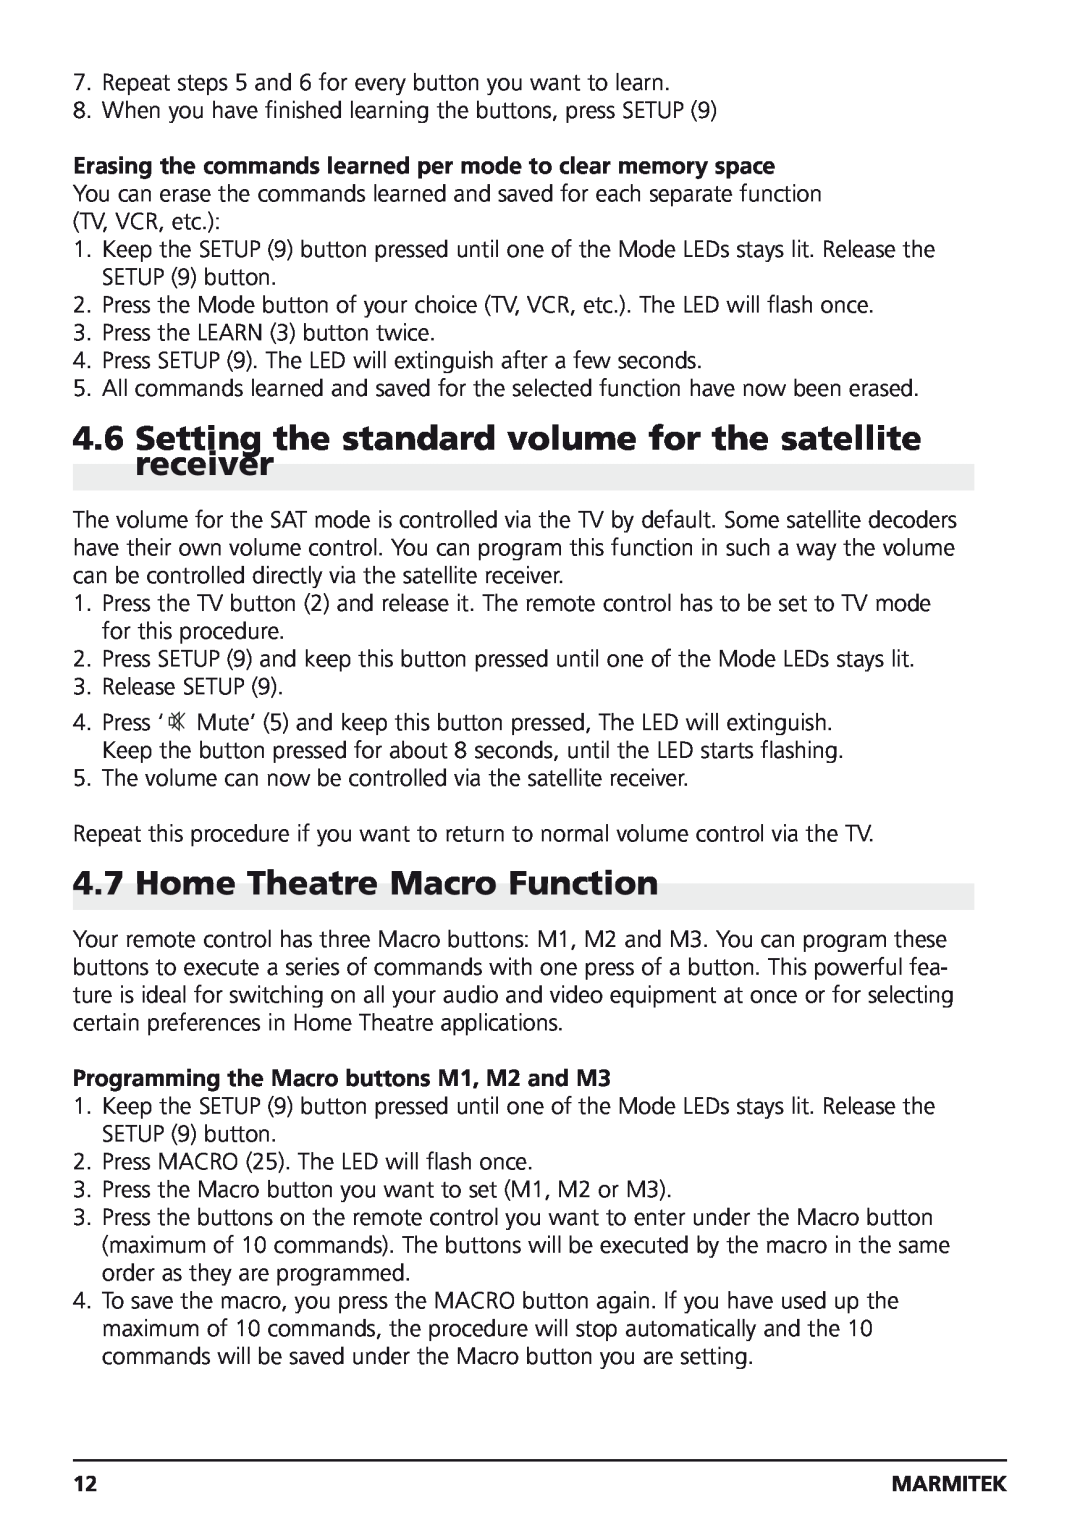 Marmitek Easycontrol 8 owner manual Setting the standard volume for the satellite receiver, Home Theatre Macro Function 